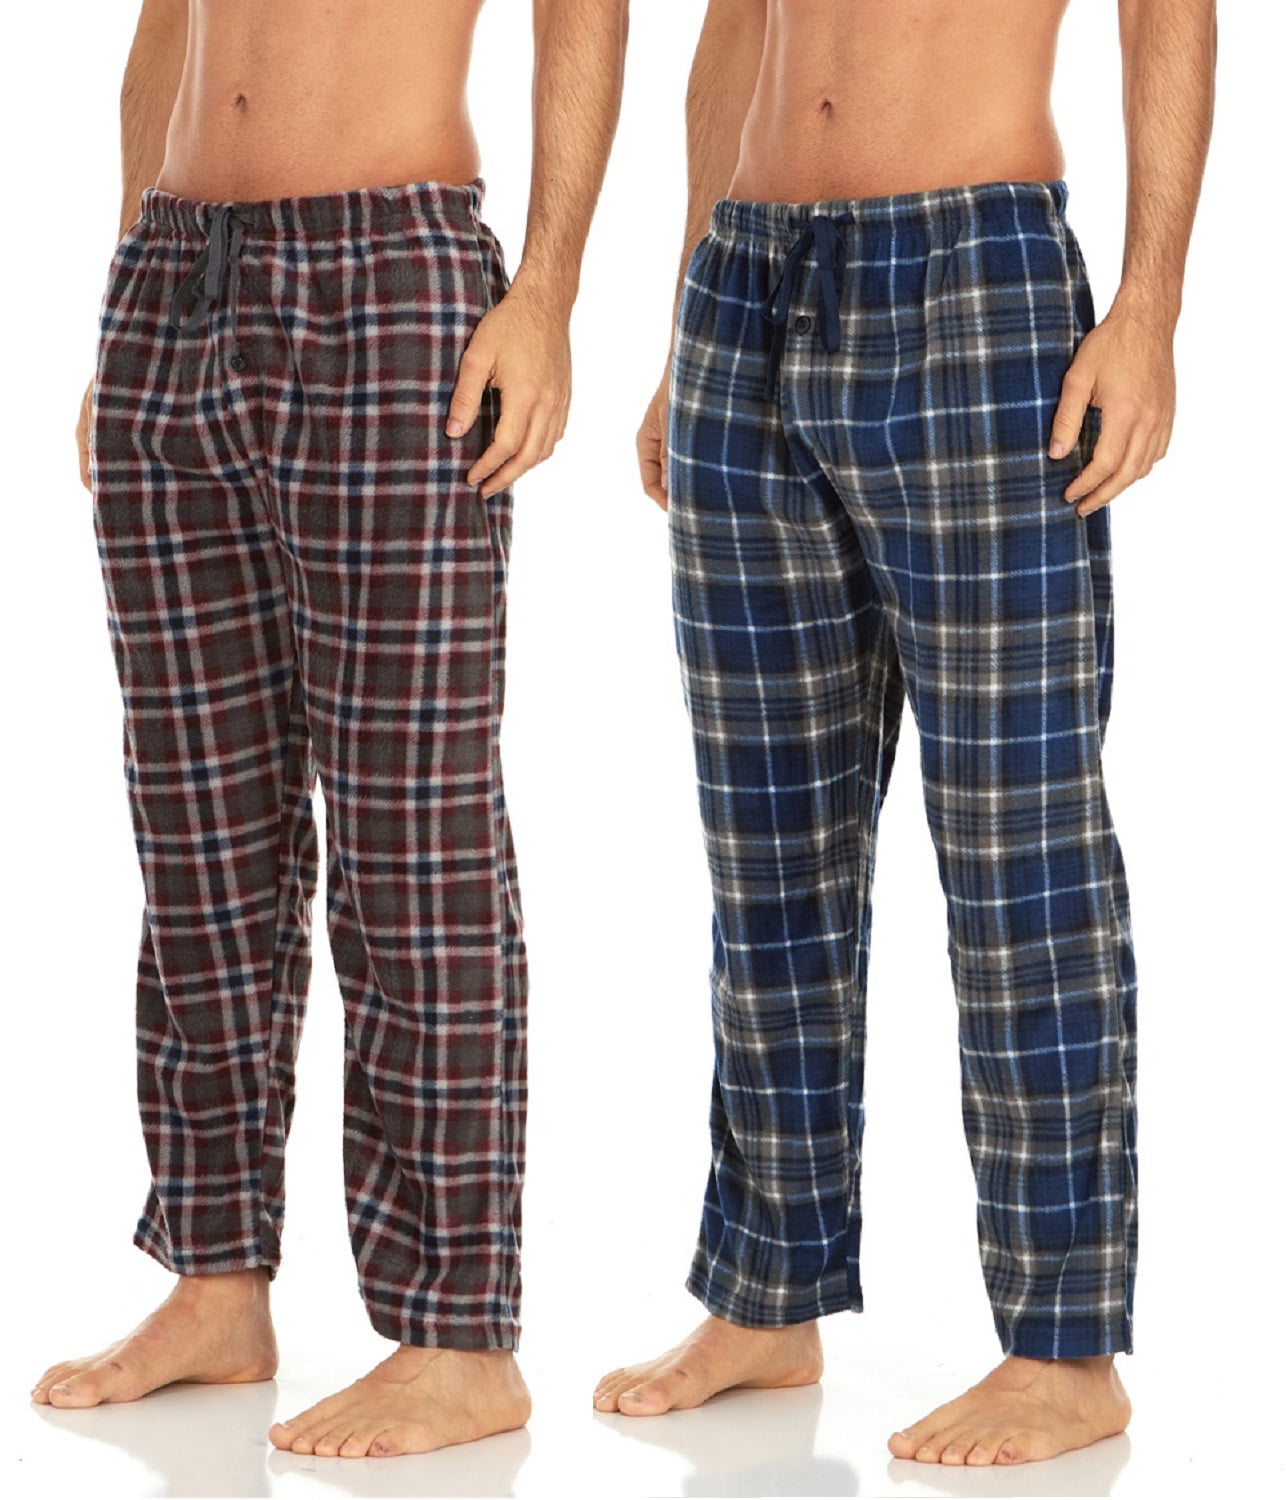 Daresay - Men’s Microfleece Pajama Pants/Lounge Wear with Pockets ...